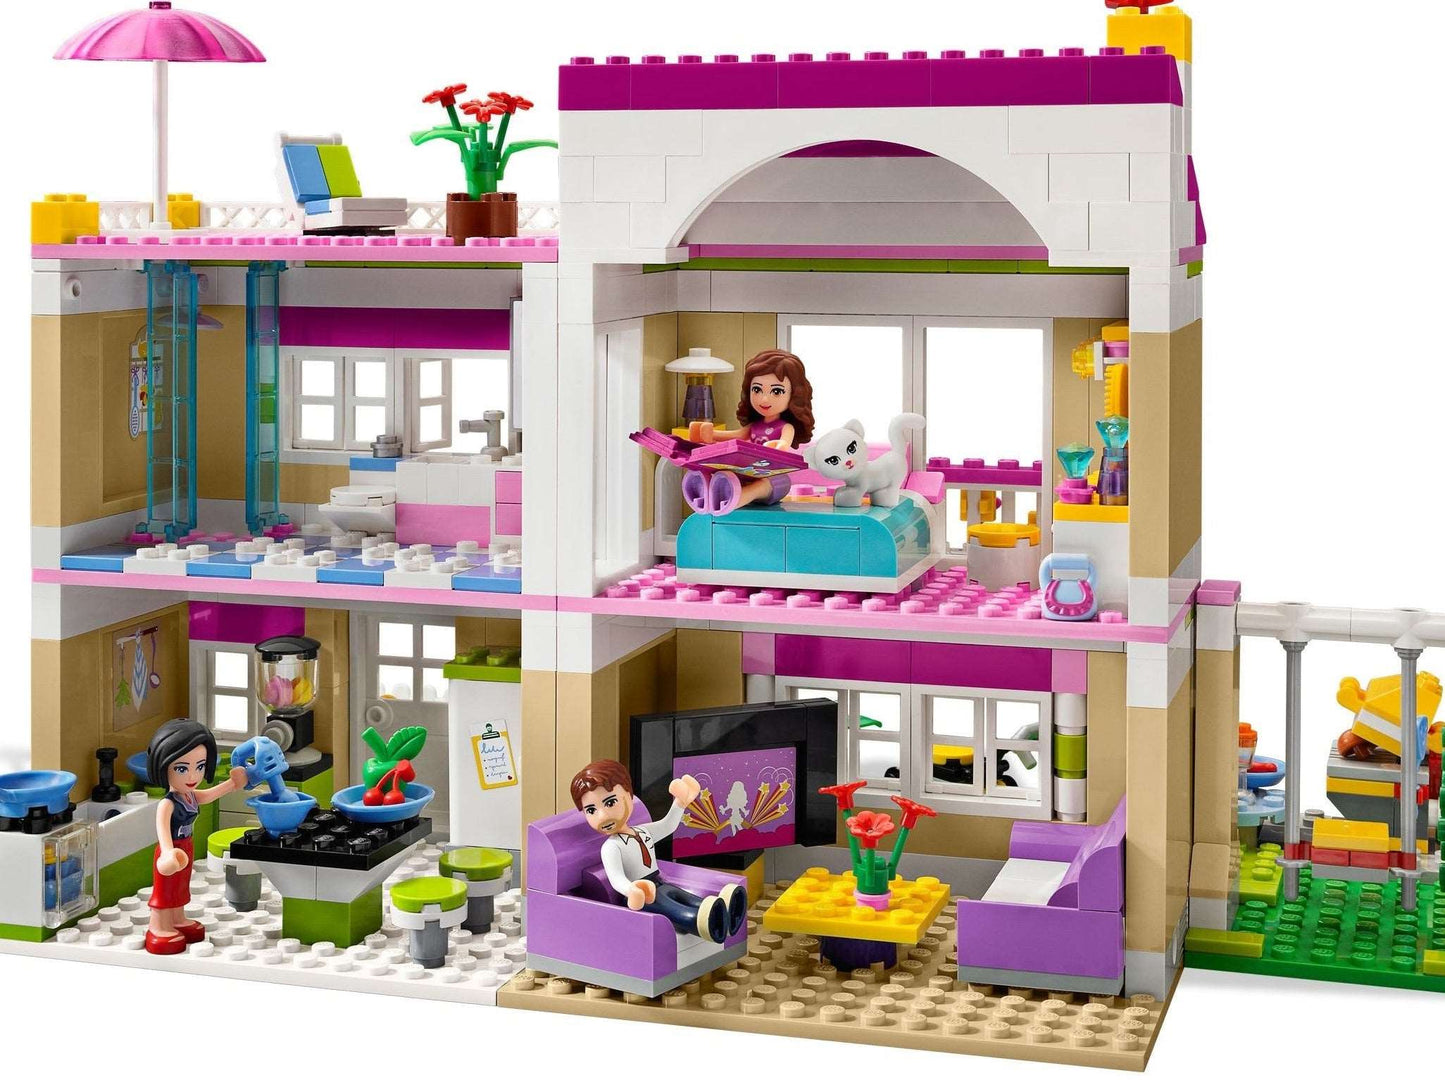 3315 : Olivia's Huis - Manchester United - Brickset for You Huur Lego Kortrijk (West-Vlaanderen)